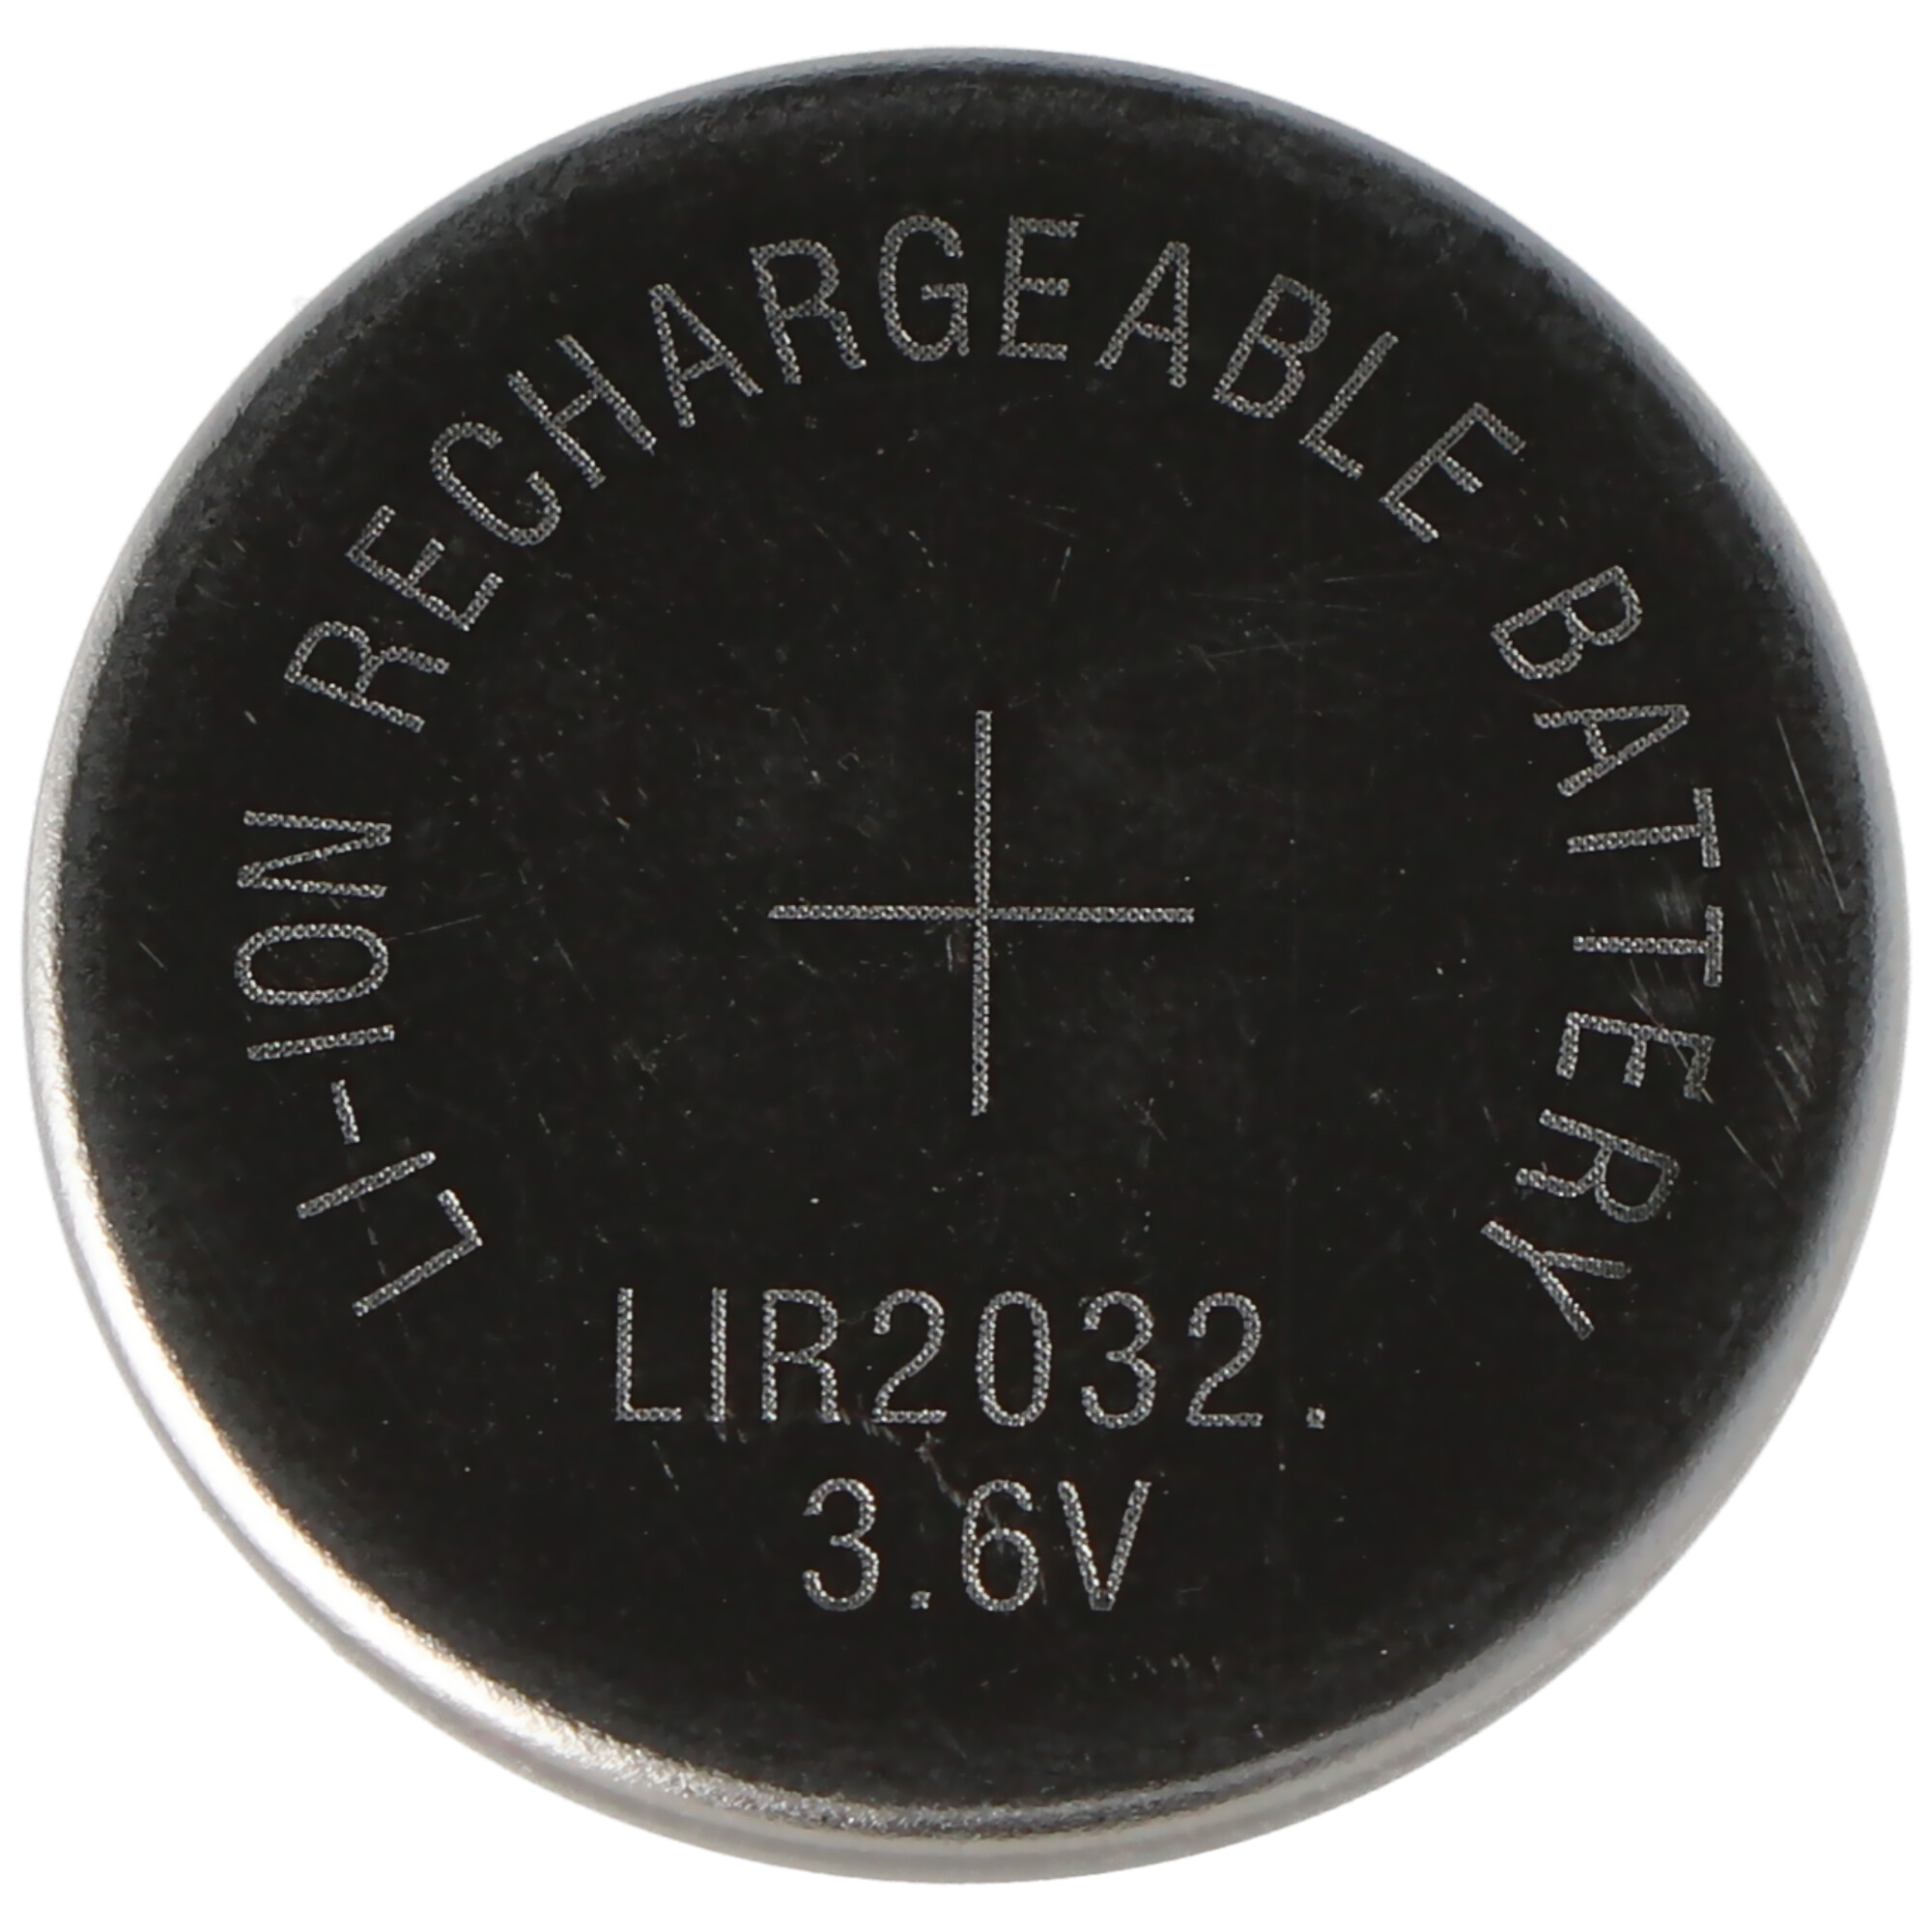 LIR2032 Li-Ion Akku 3,6V Akku LIR 2032, 3,2 x 20 mm, 3.6V Button Cell Liion